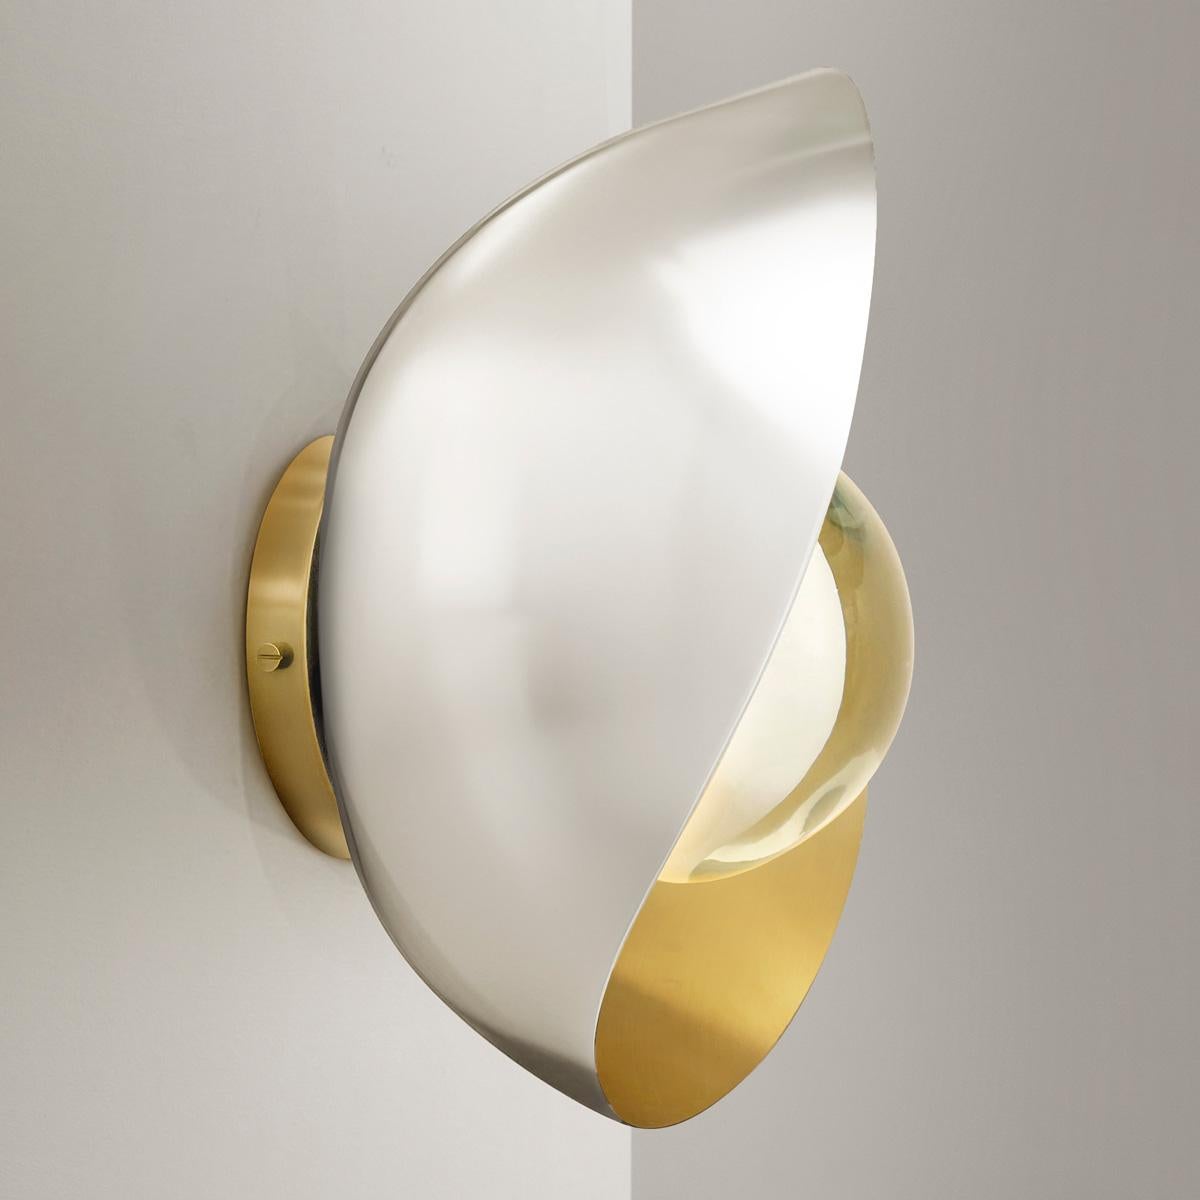 Perla Wall Light by Gaspare Asaro-Satin Brass/Acqua Finish For Sale 2